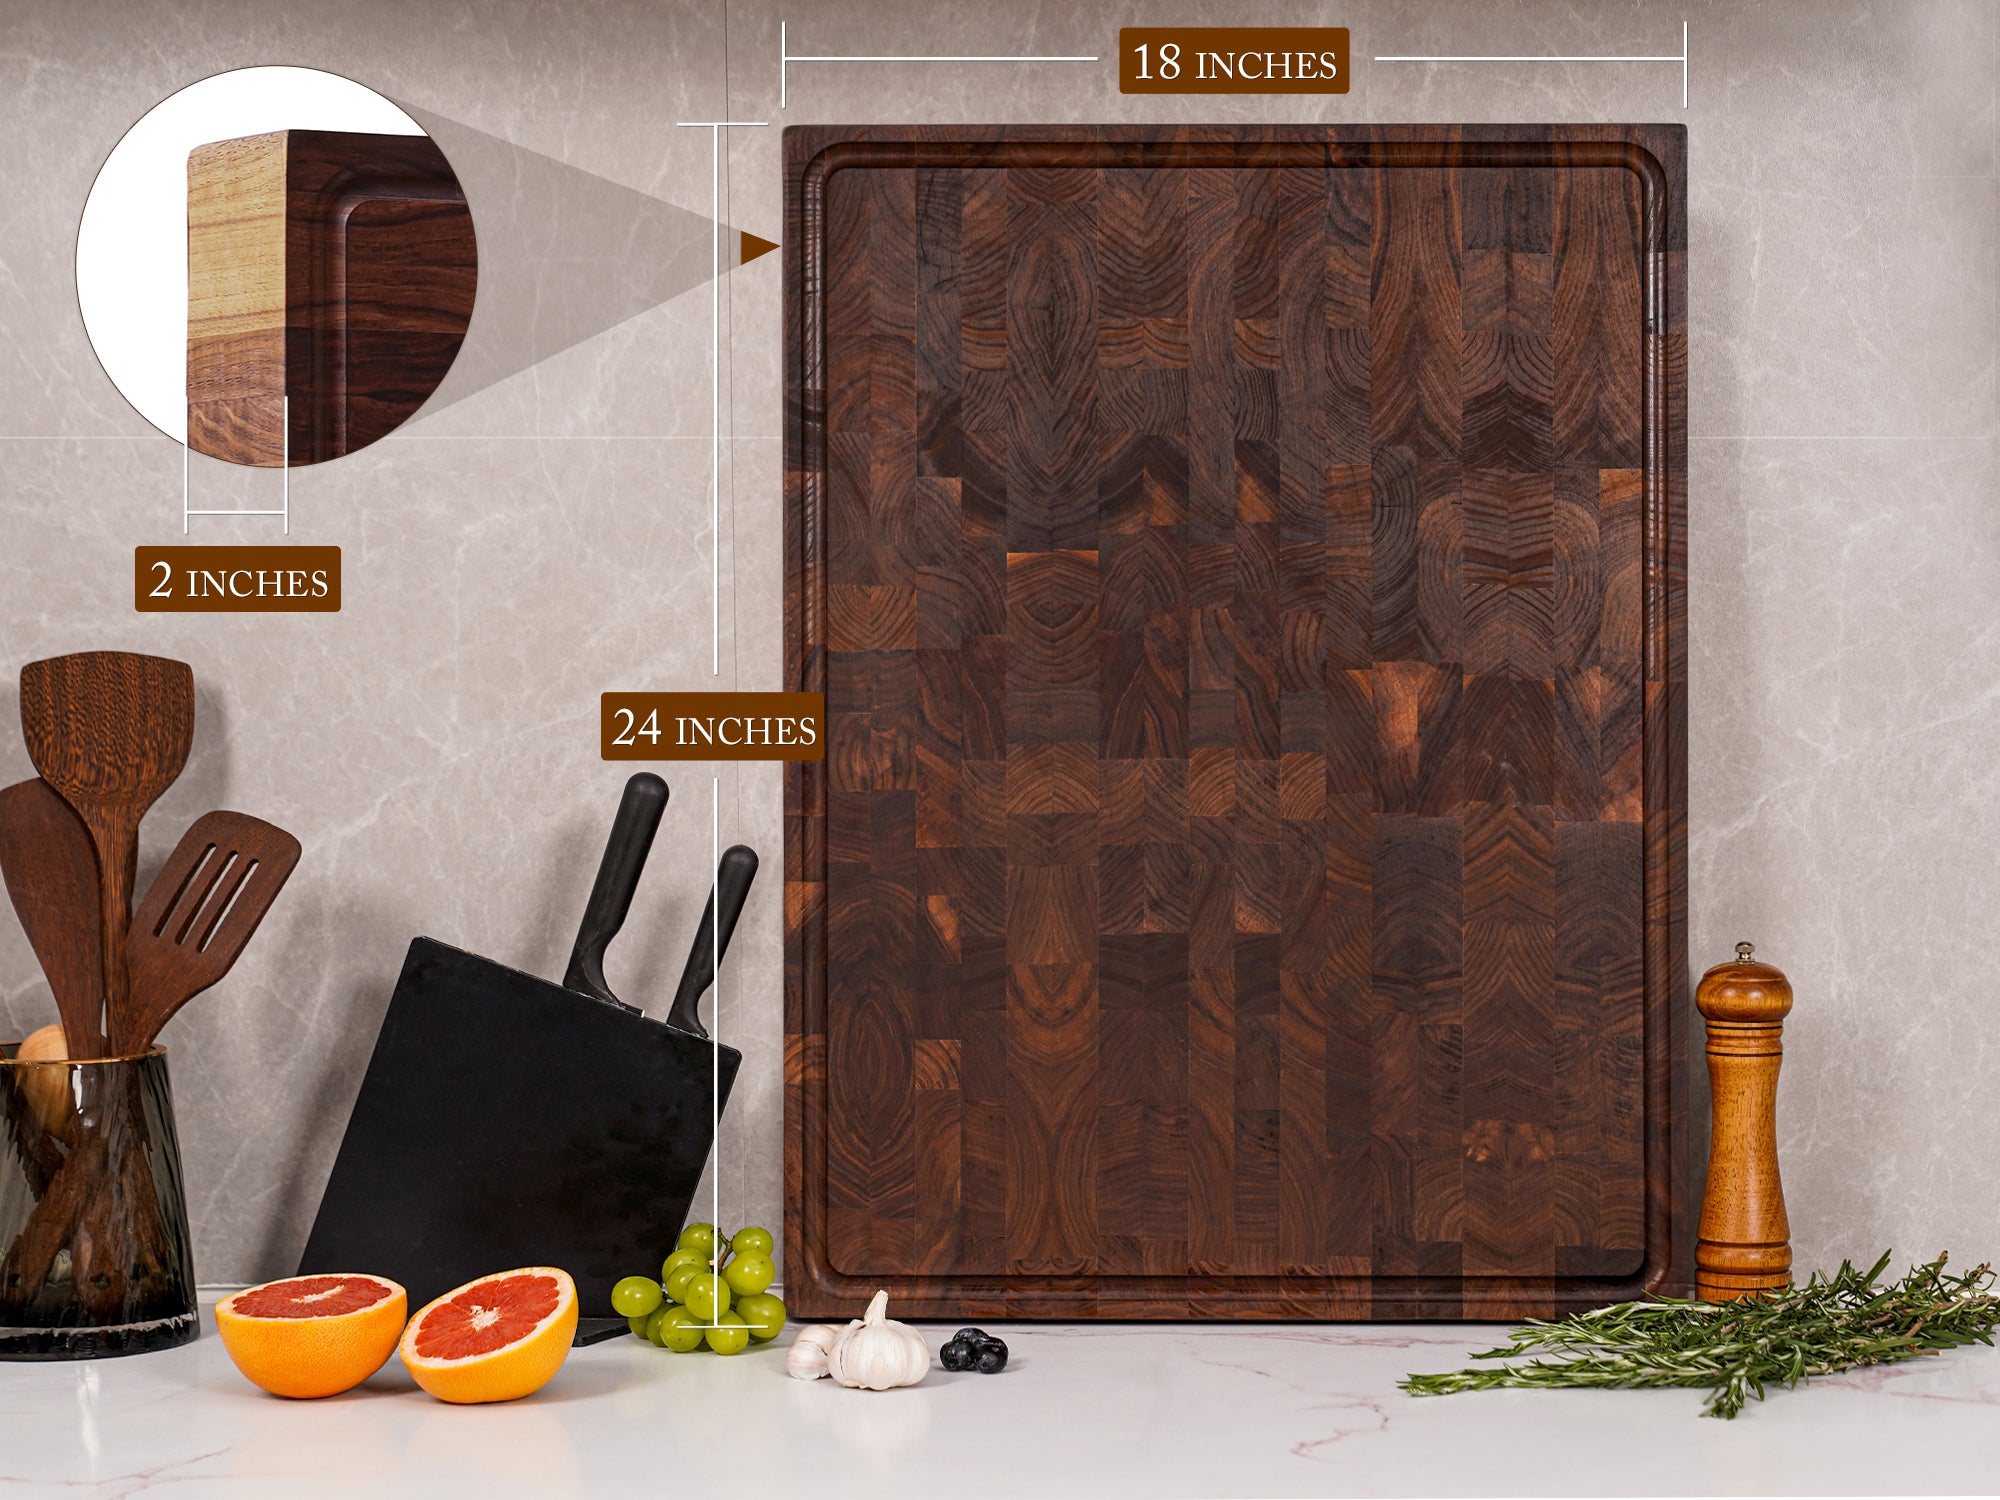 AZRHOM Large Walnut Wood Cutting Board for Kitchen 18x12 (Gift